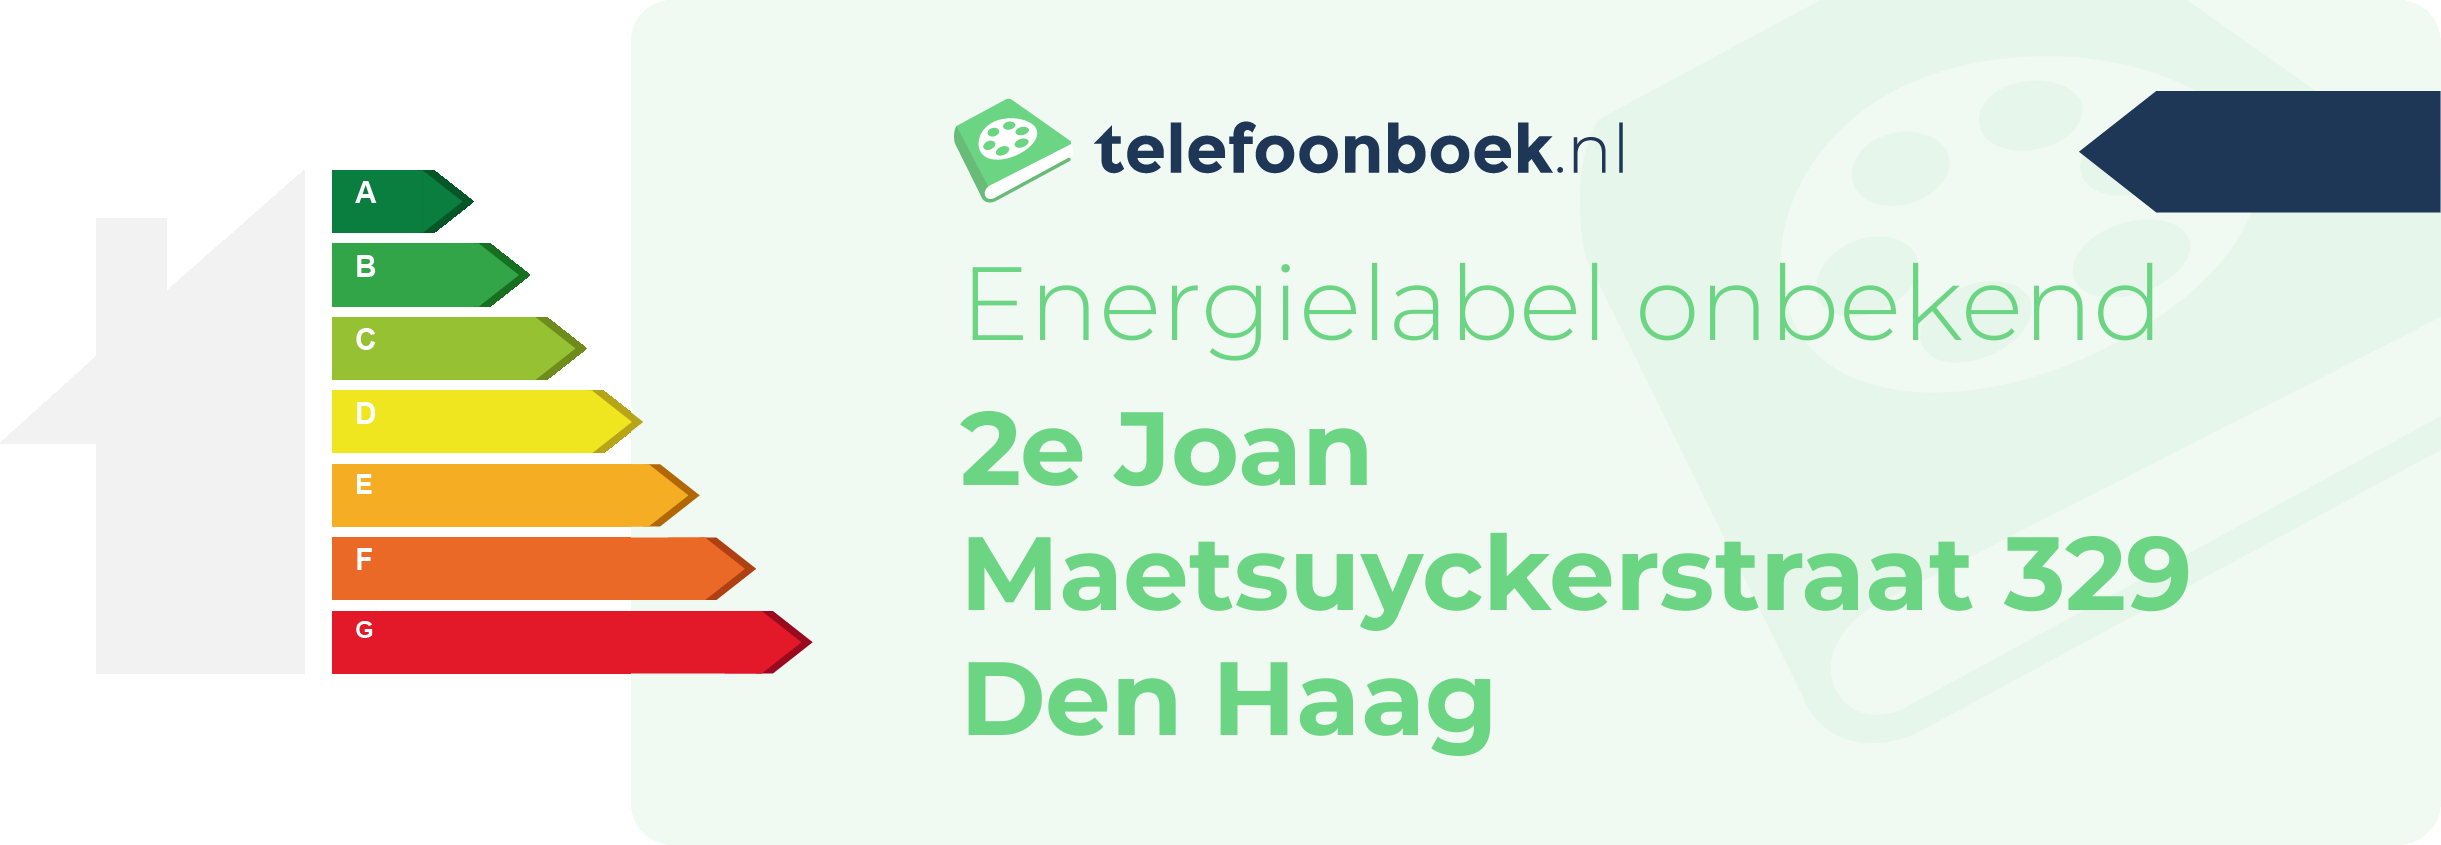 Energielabel 2e Joan Maetsuyckerstraat 329 Den Haag